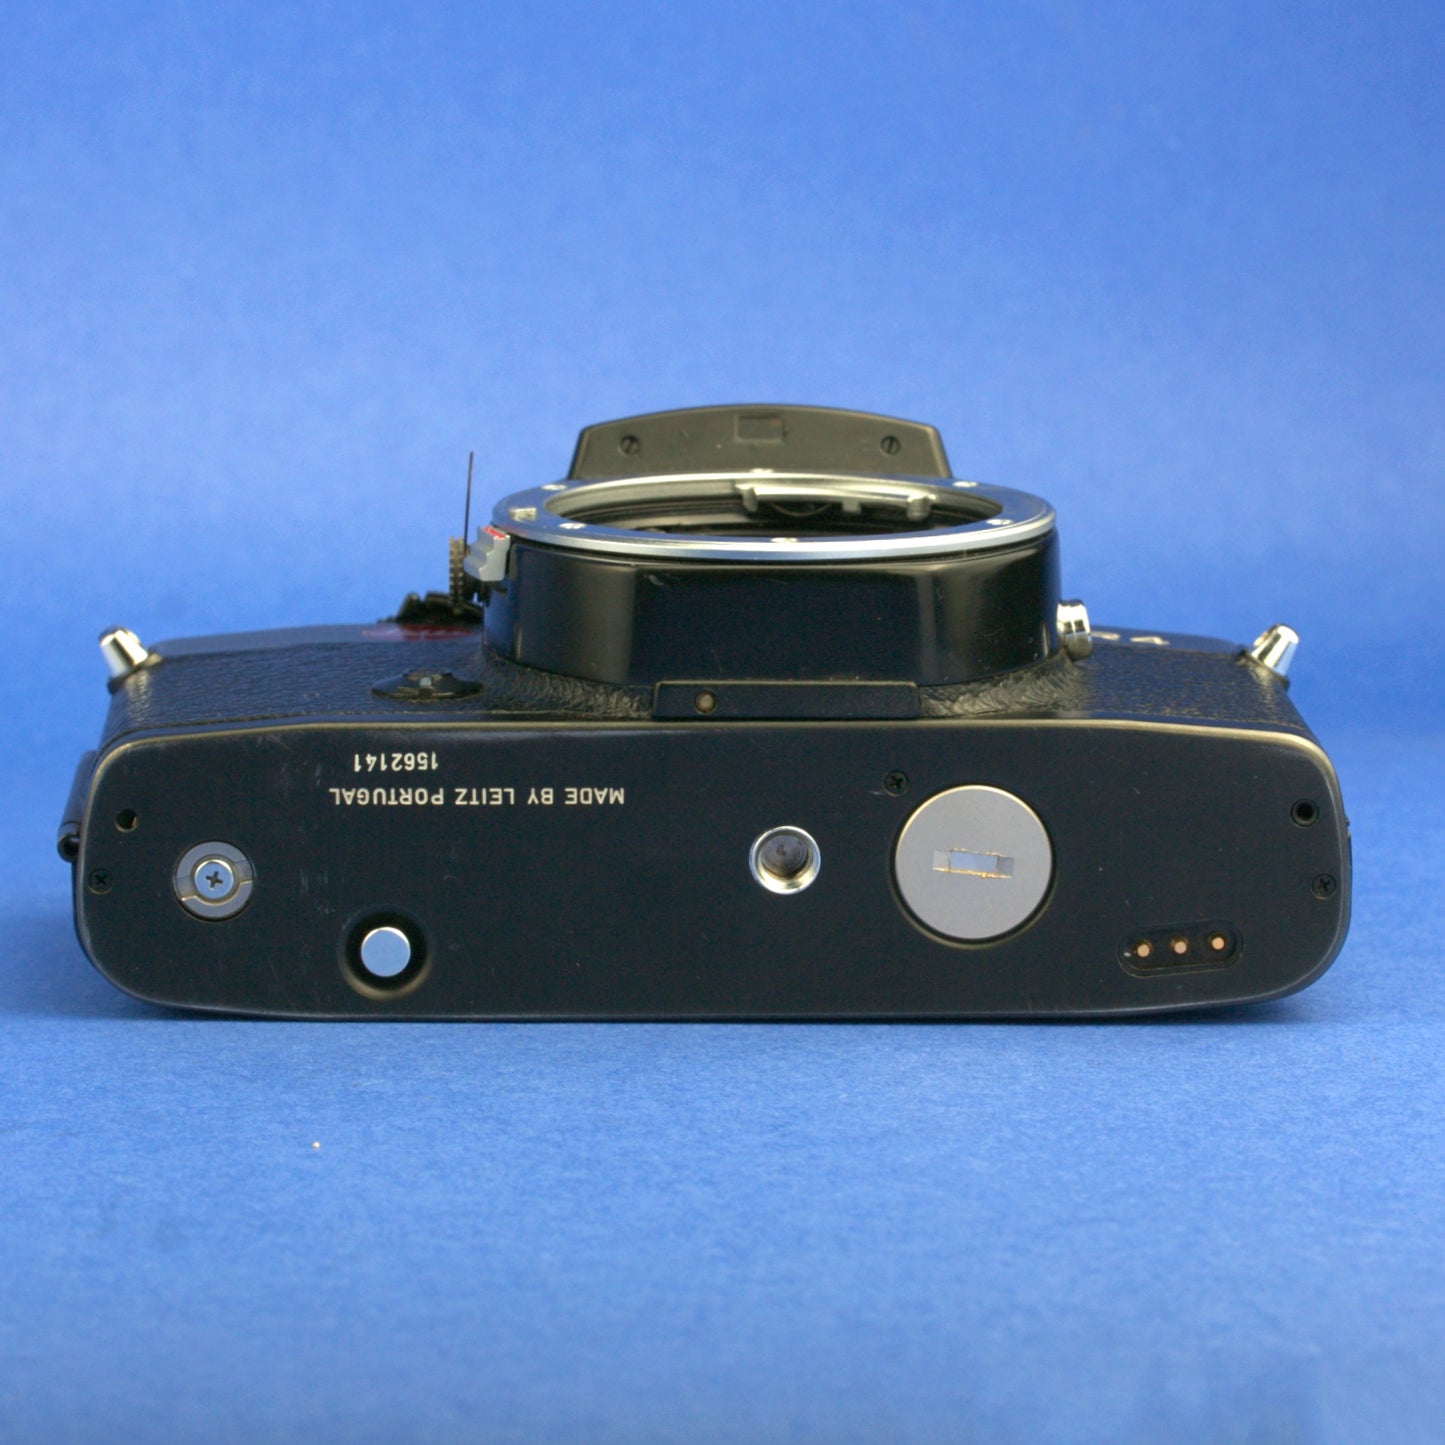 Leica R4 Film Camera Body Not Working